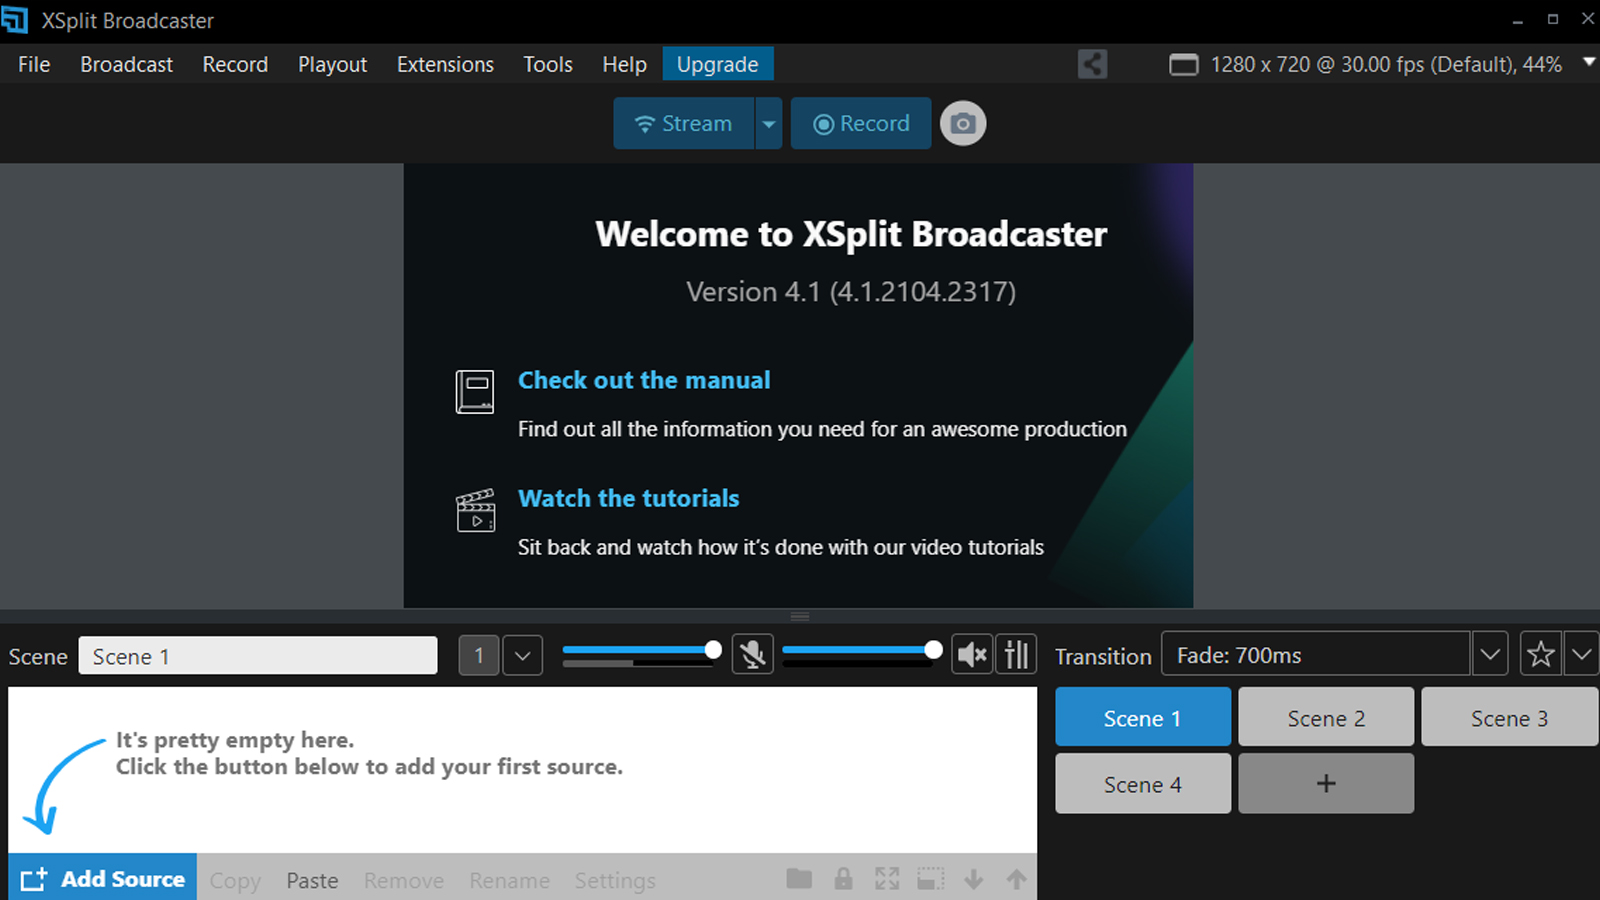 Find detailed information about XSplit Broadcaster